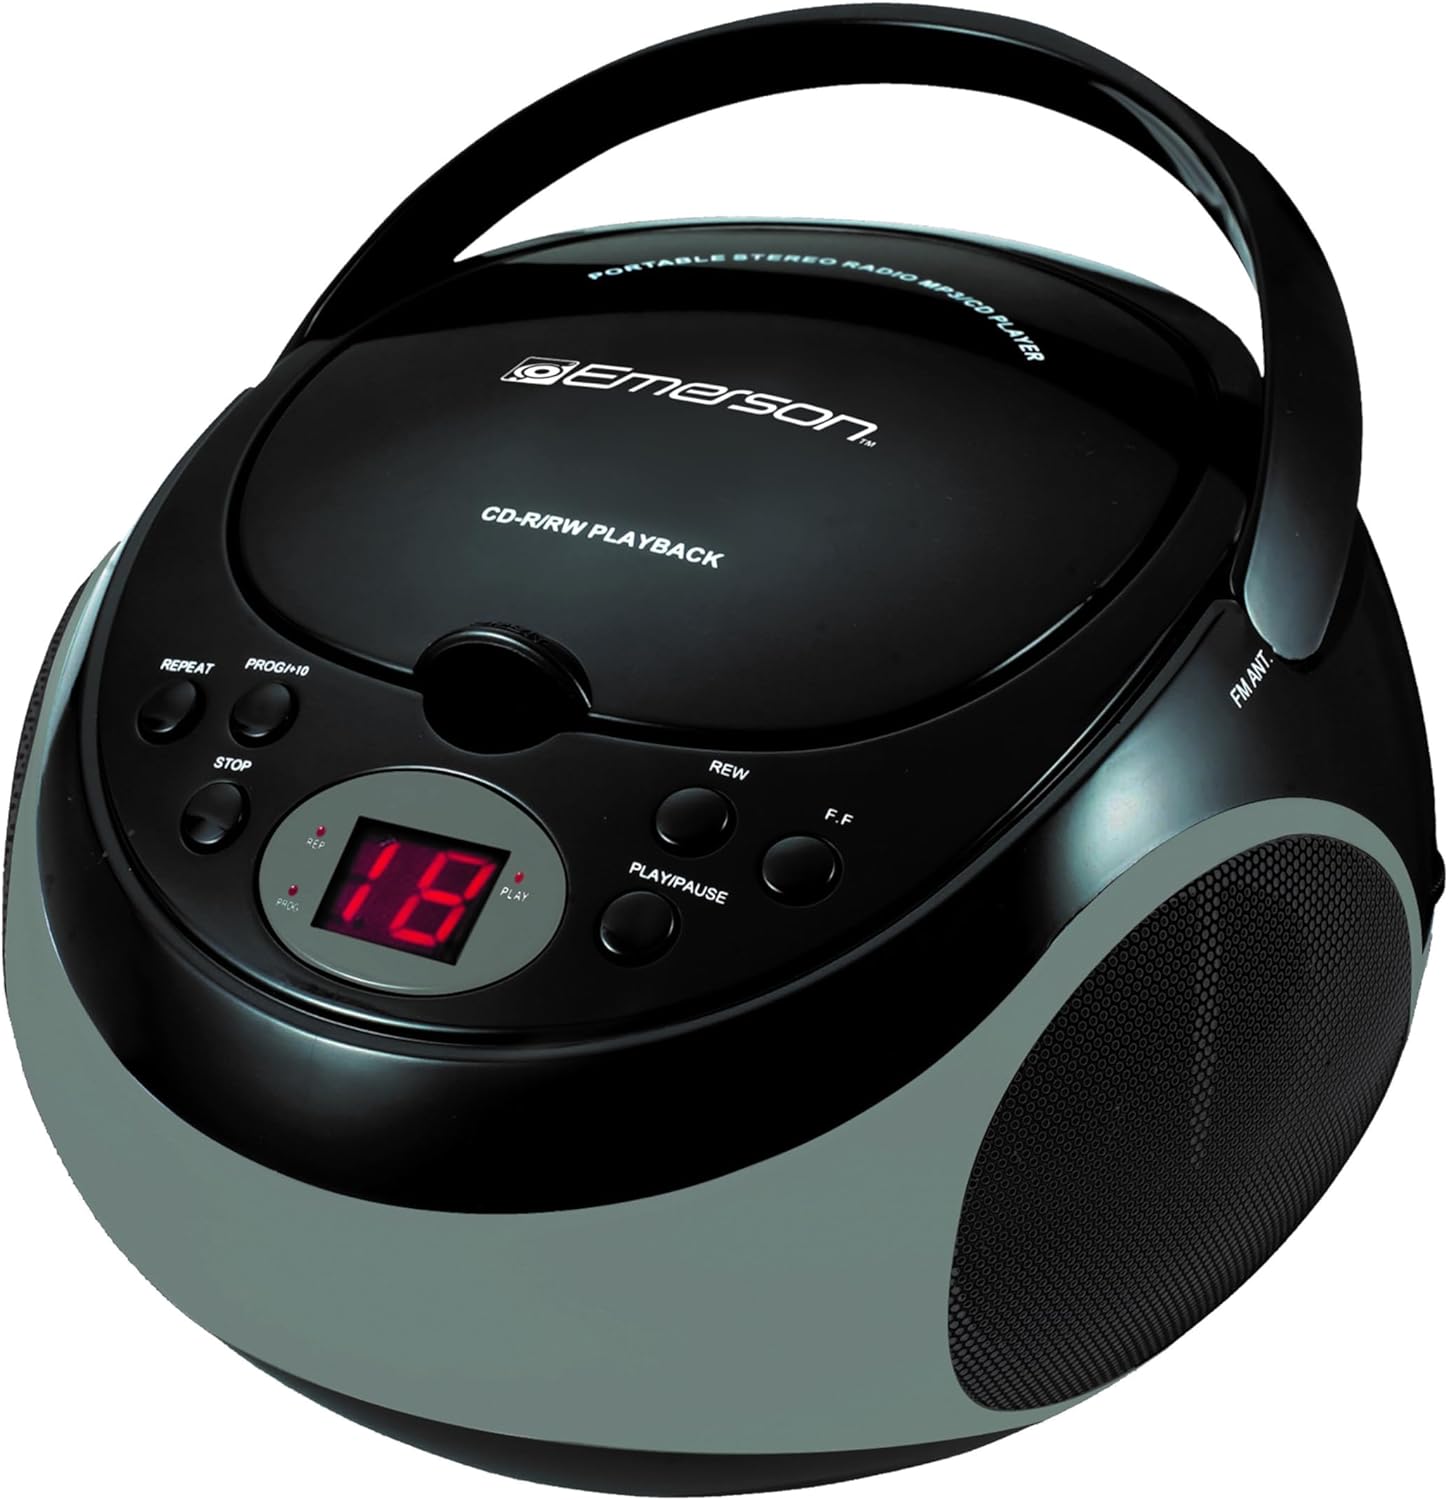 Emerson EPB-3000 Black Portable Cd Player AM FM Stereo Radio - image 3 of 4